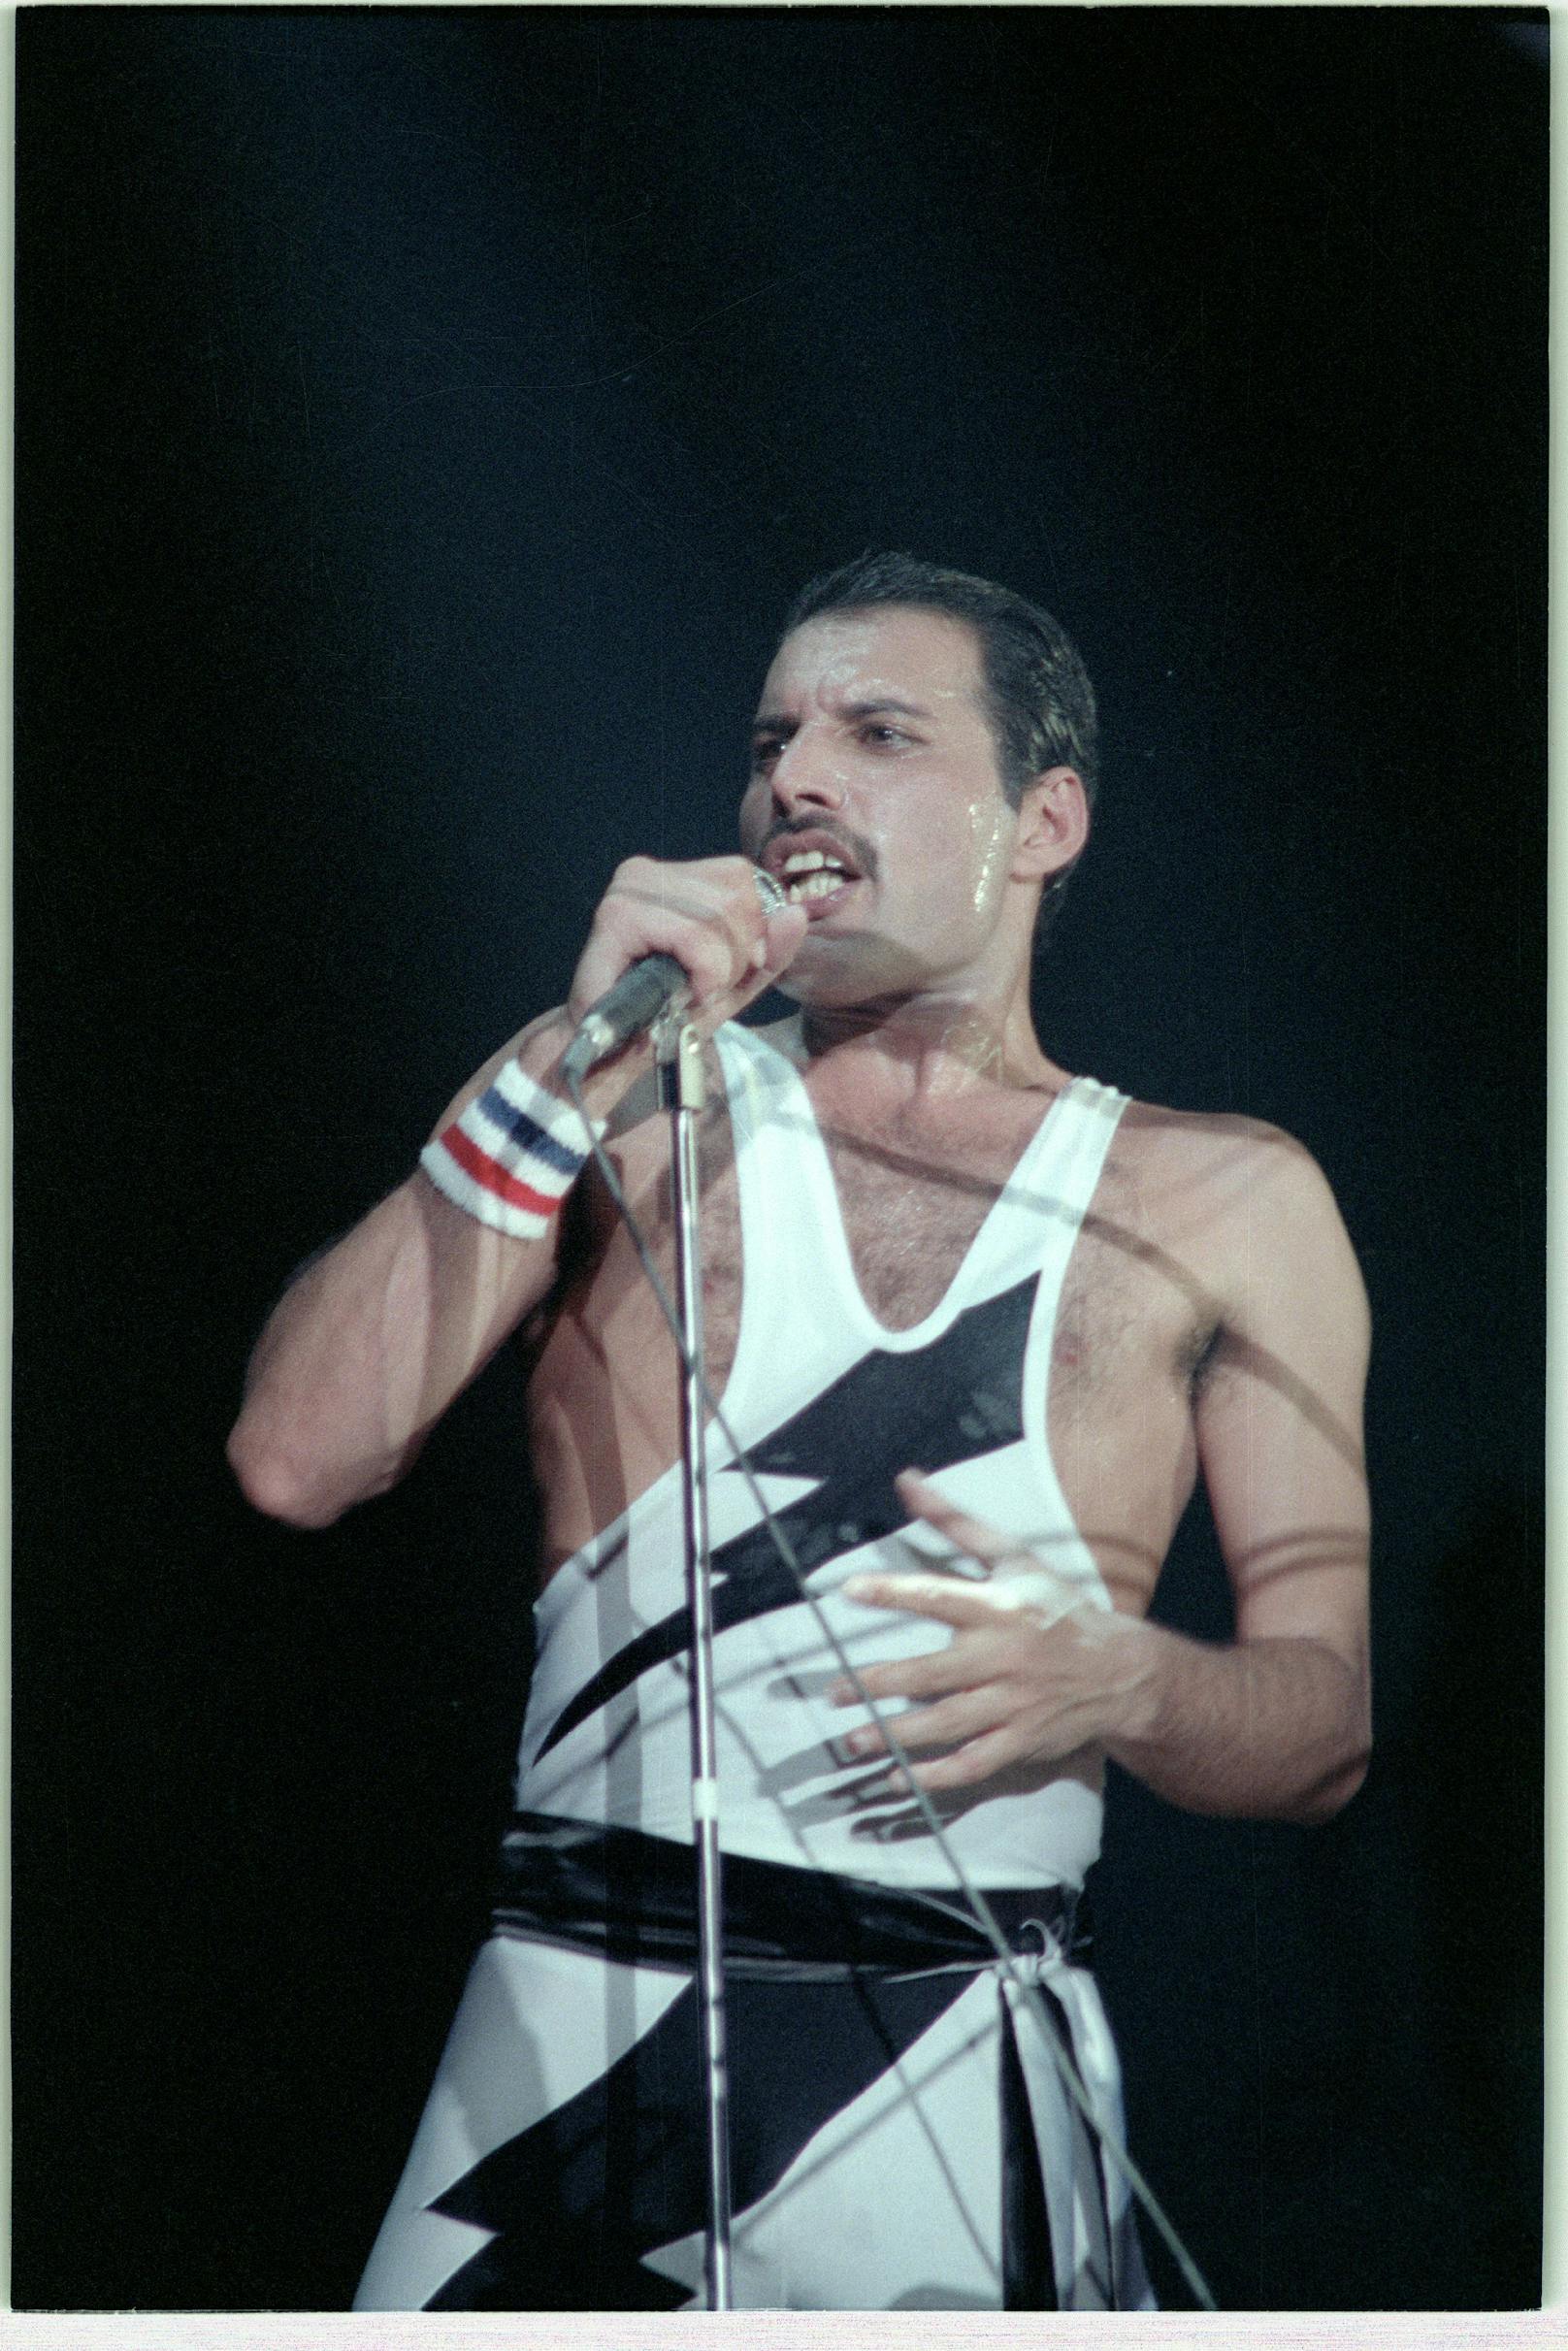 Neues Queen-Album mit Freddie Mercury